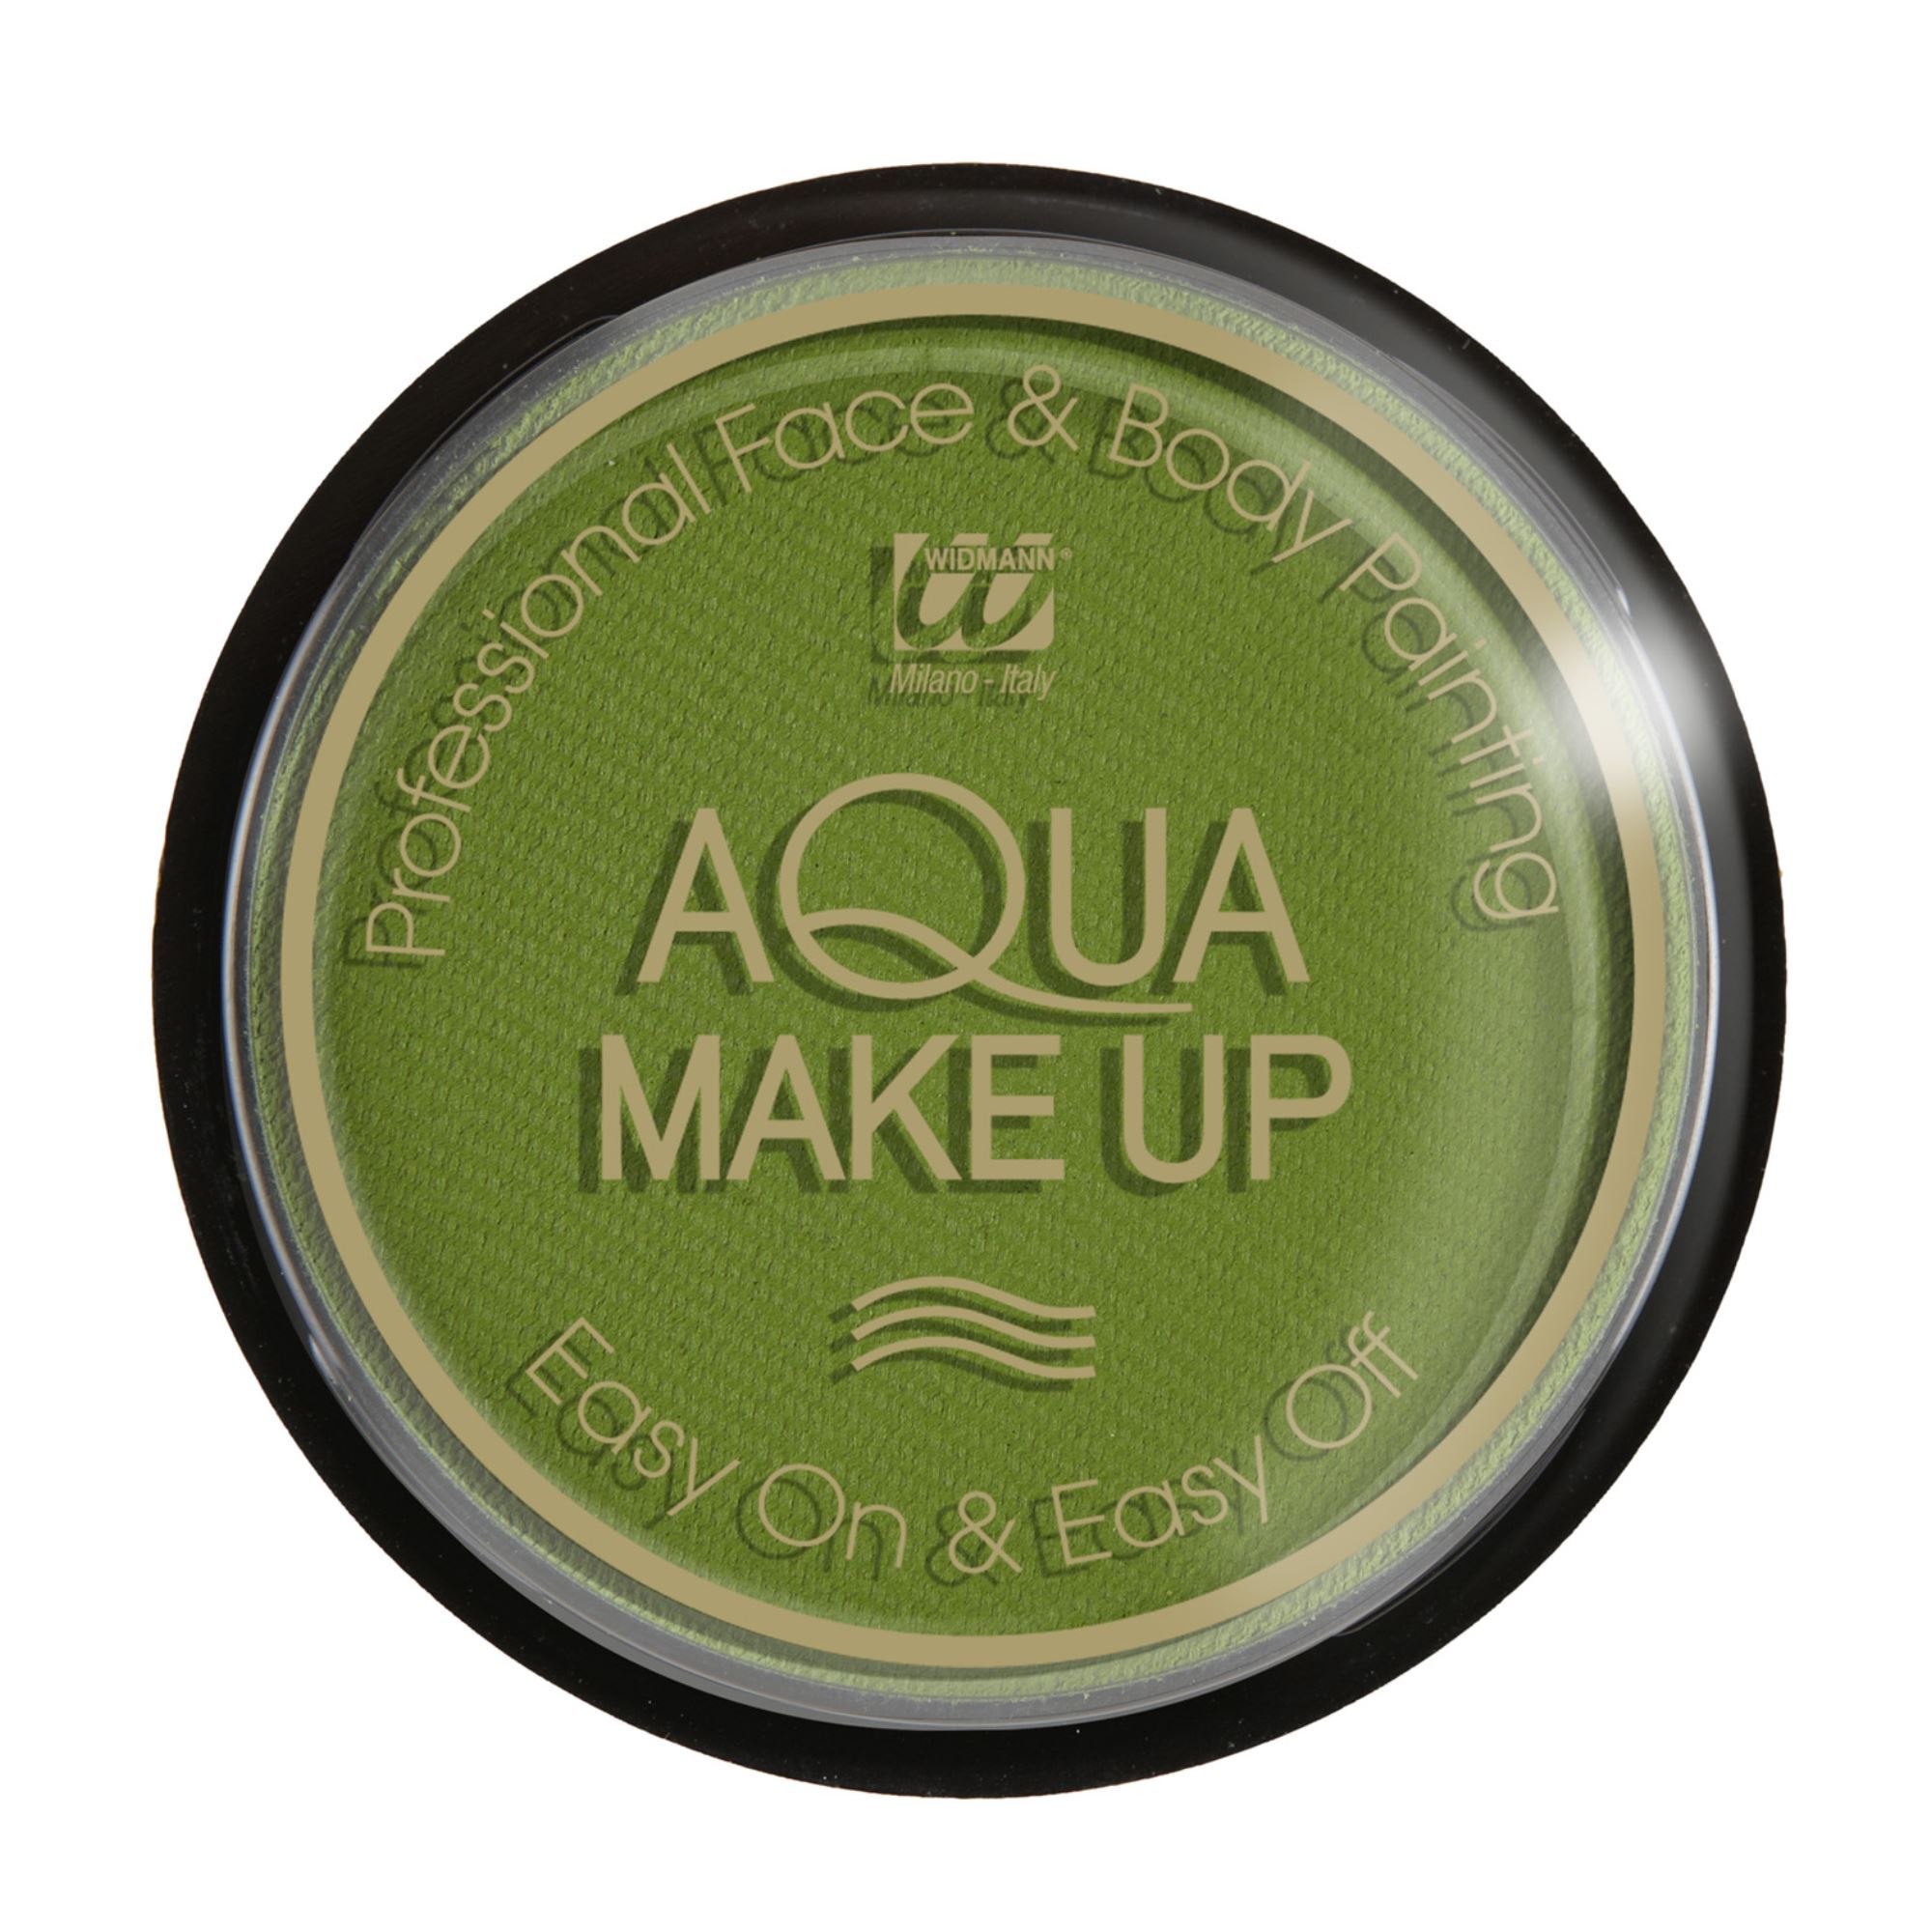 Aqua make-up 15 gram groen